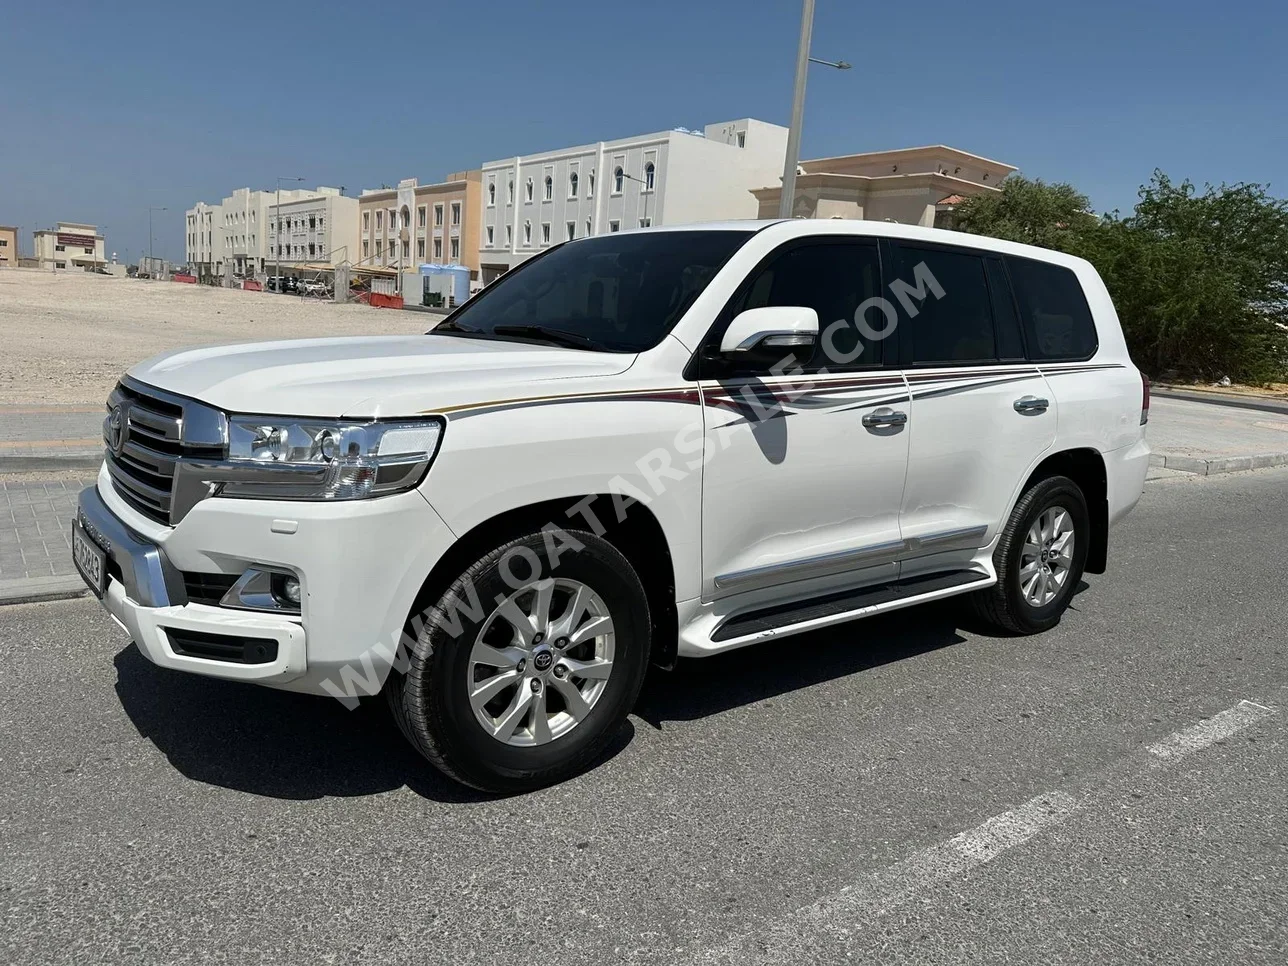 Toyota  Land Cruiser  GXR  2018  Automatic  186,000 Km  8 Cylinder  Four Wheel Drive (4WD)  SUV  White